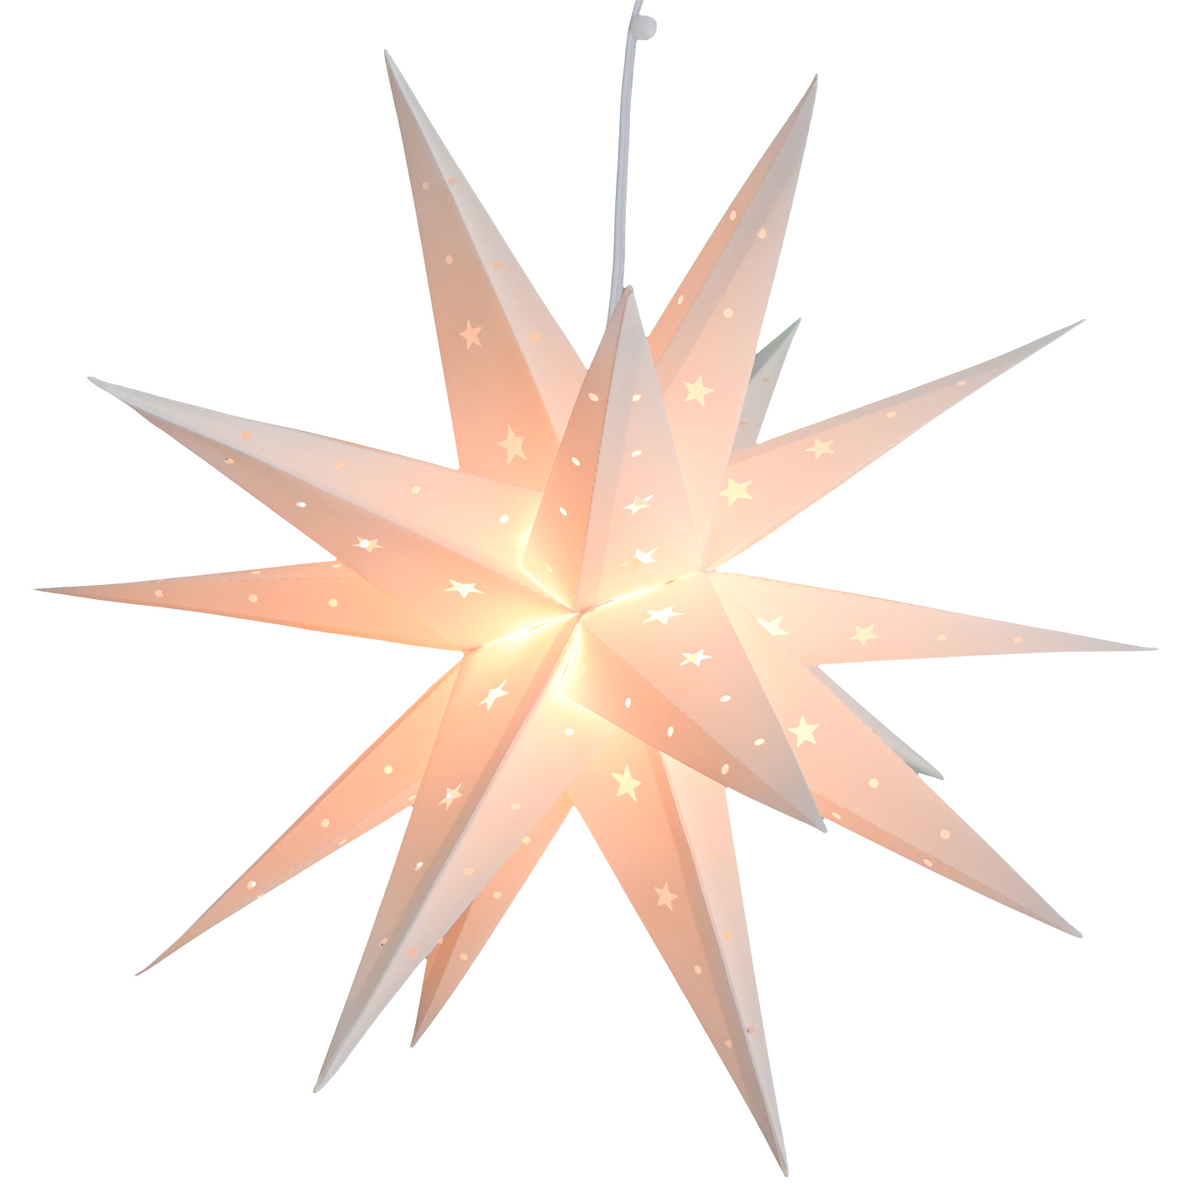 23&quot; White Moravian Weatherproof Star Lantern Lamp, Multi-Point Hanging Decoration